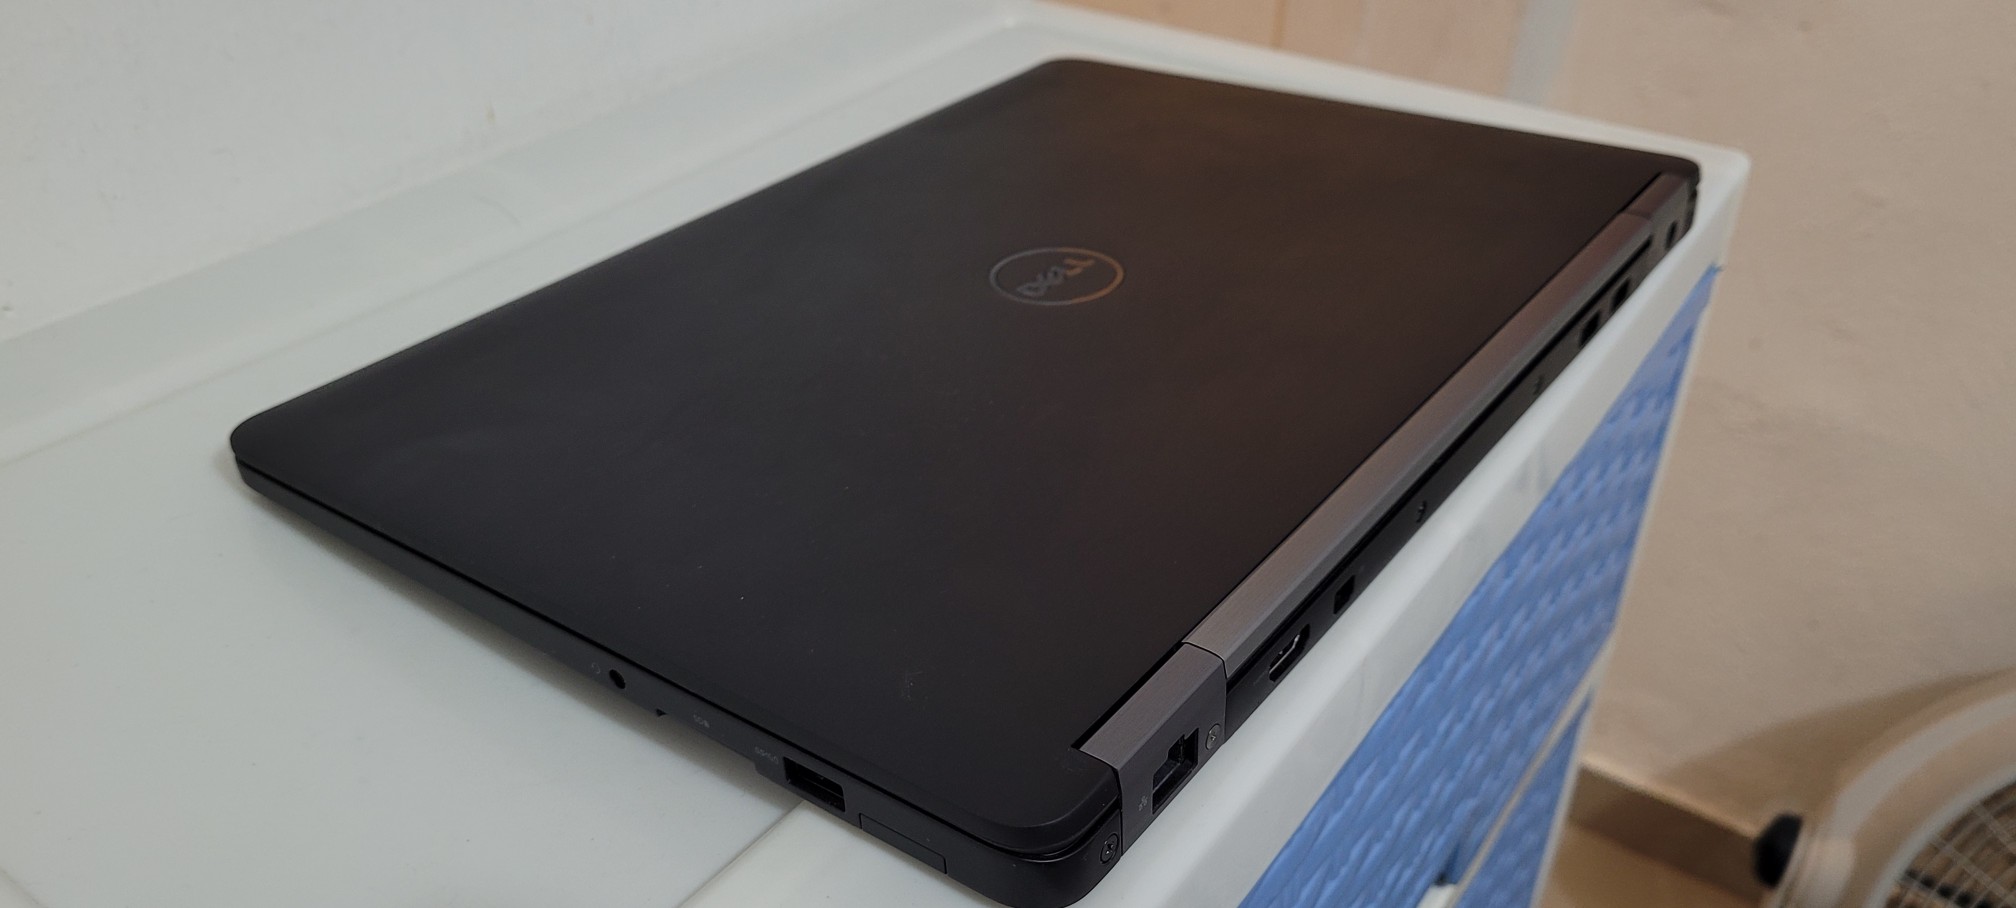 computadoras y laptops - laptop Dell 17 Pulg Core i7 Ram 12gb Disco 256gb SSD 2